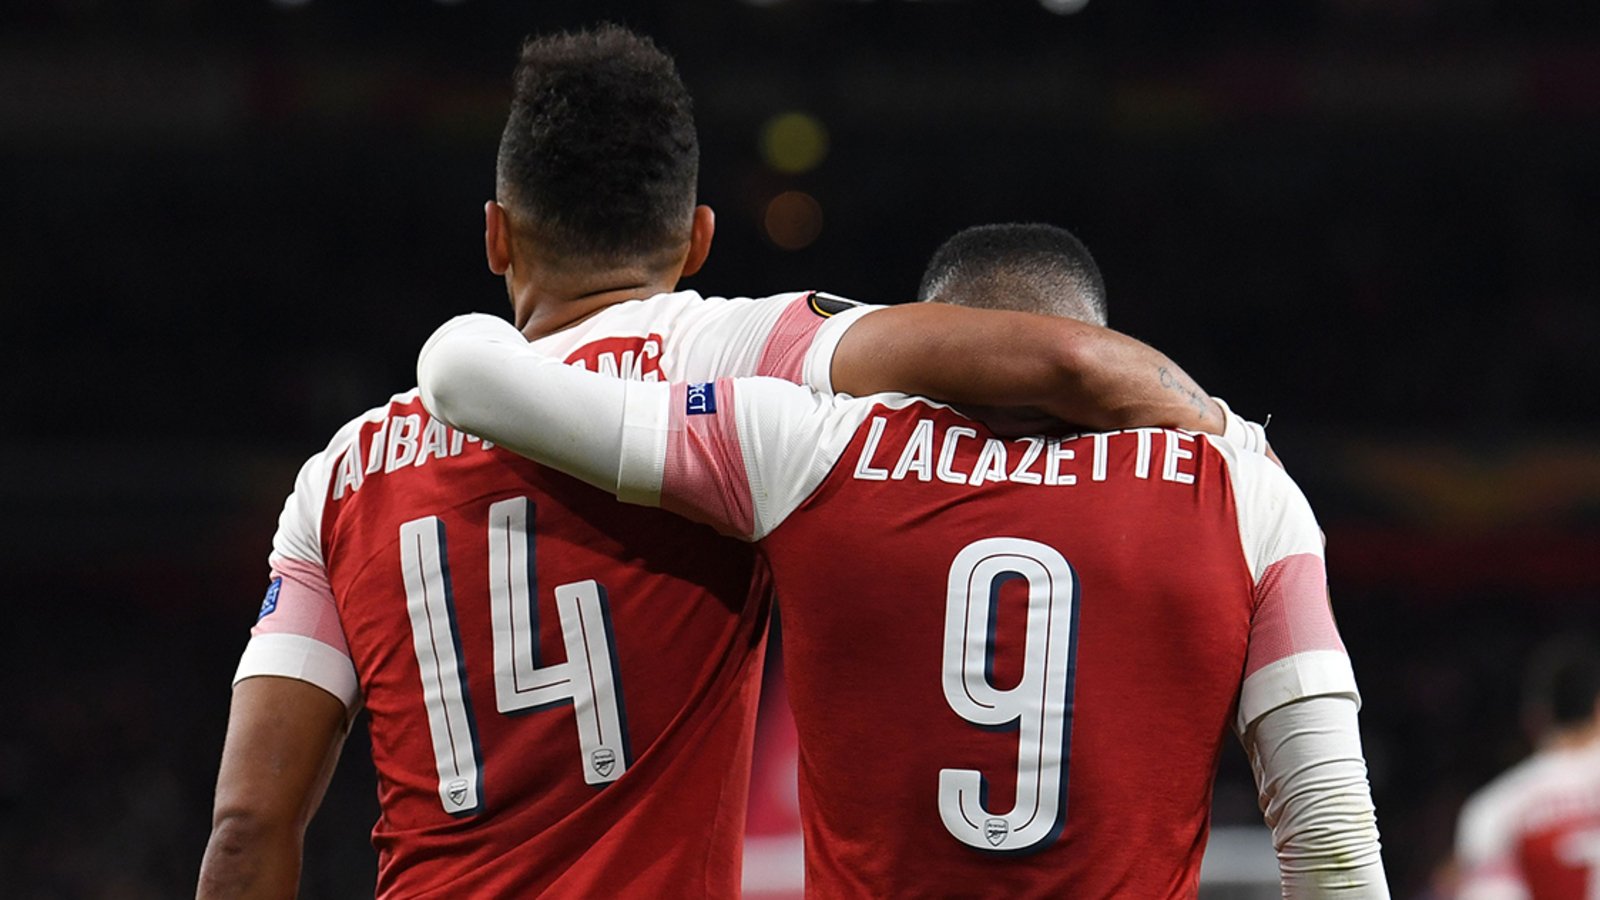 UEL: Three things we noticed | Analysis | News | Arsenal.com